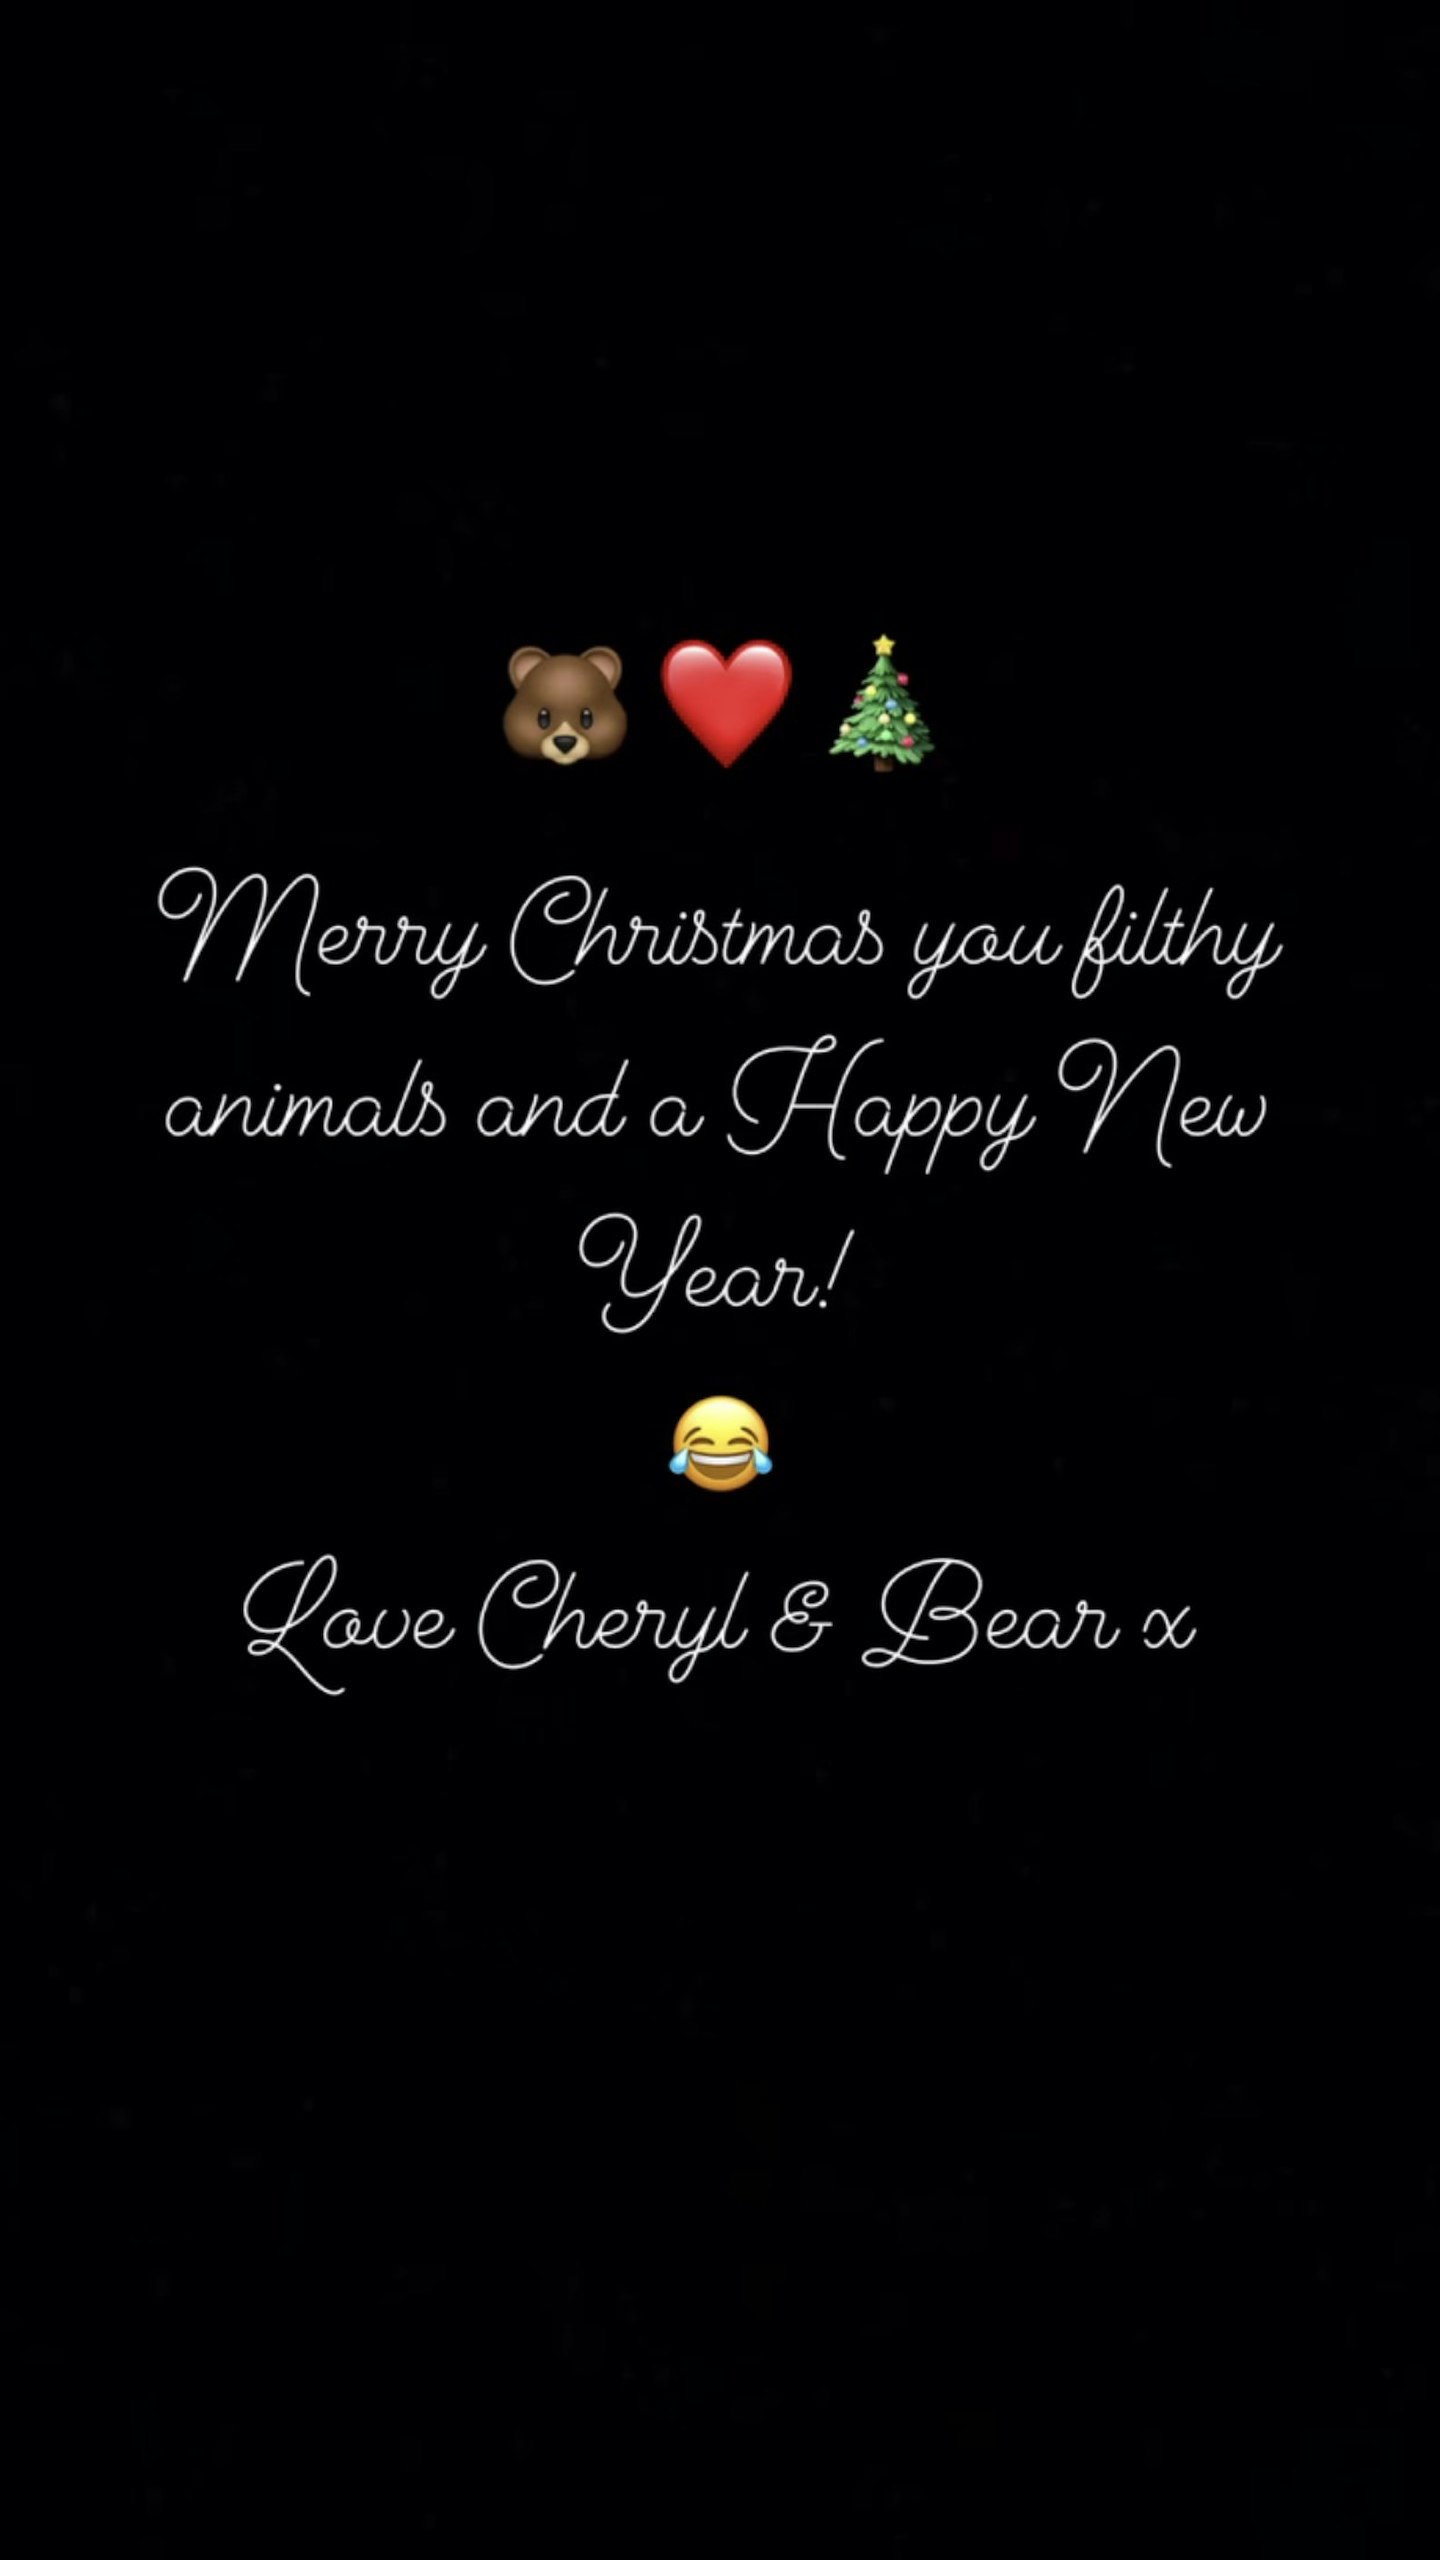 Bear Payne Christmas message